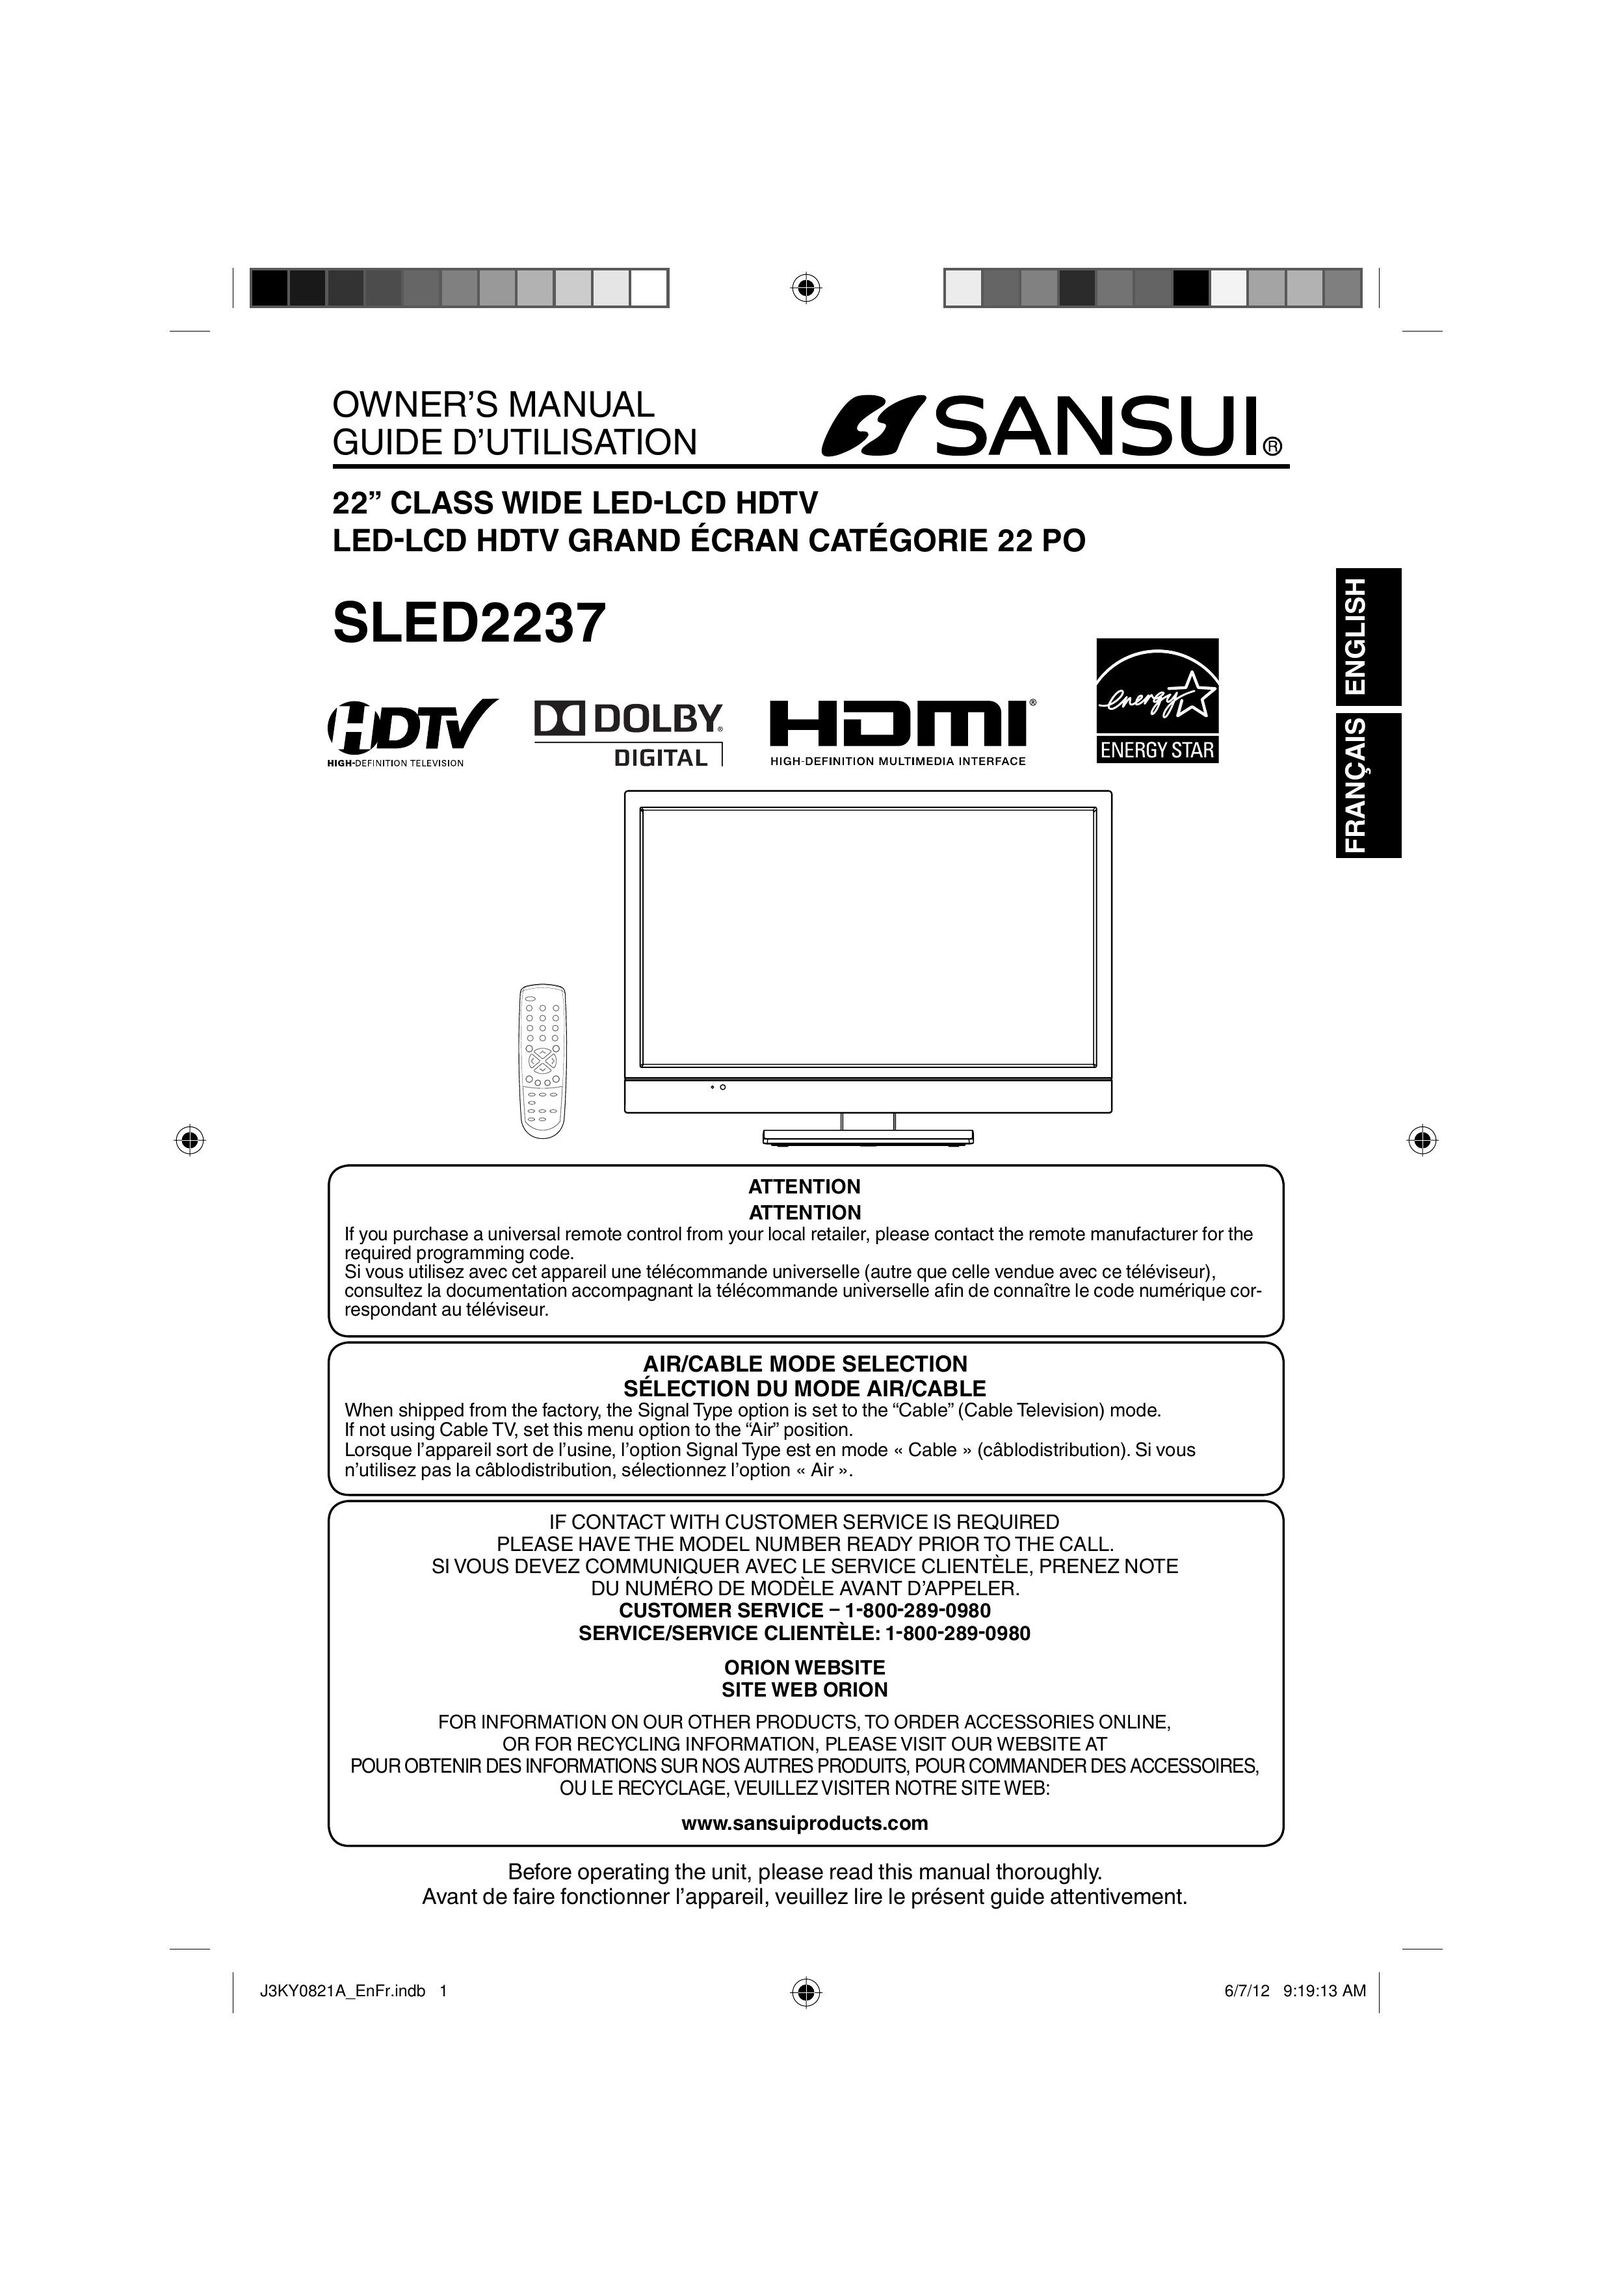 Sansui SLED2237 Flat Panel Television User Manual